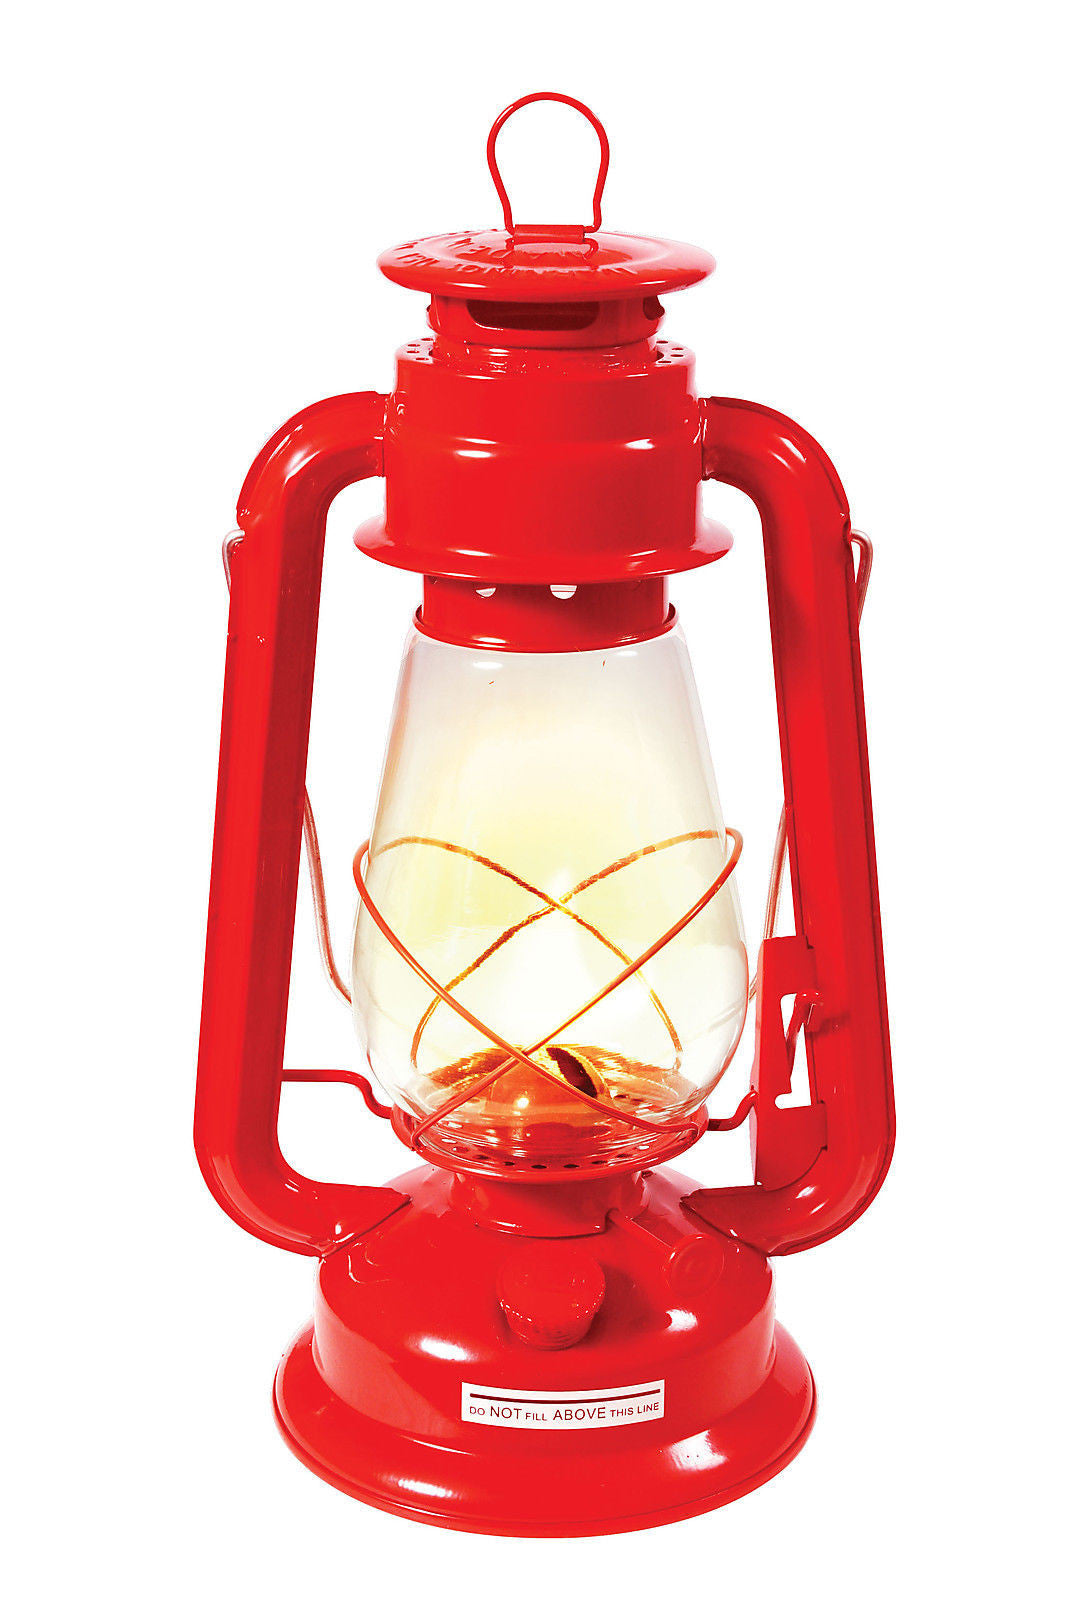 12" Kerosene Lantern With Glass Globe - Red - Adjustable Wick - Camping, Hiking